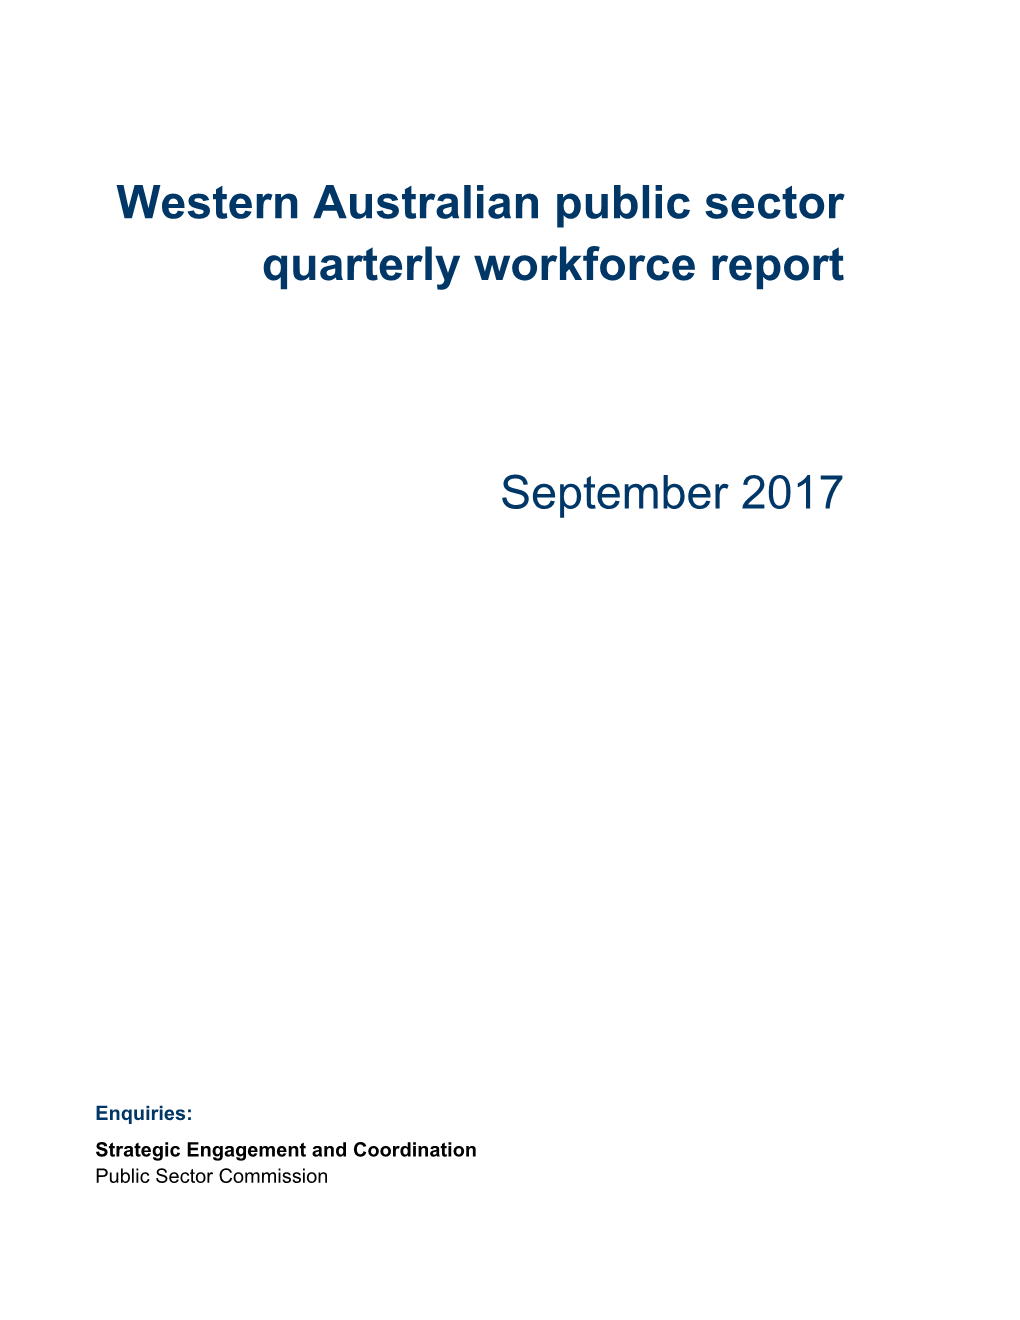 State of Western Australia 2017